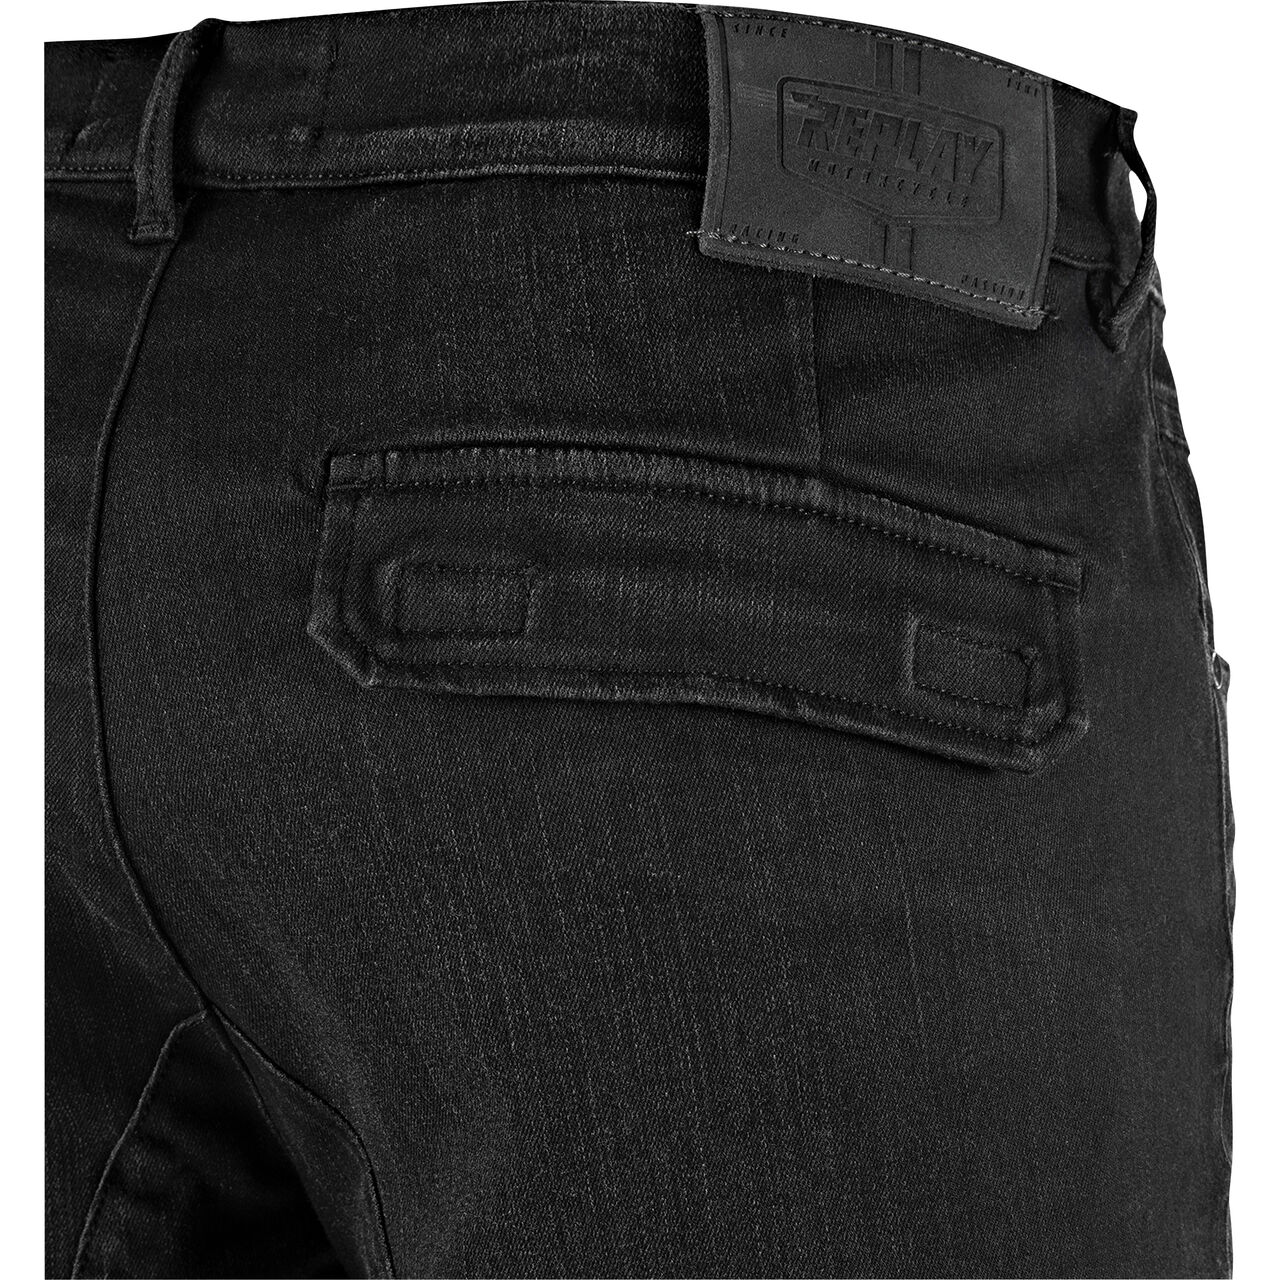 Shift Jeans black 31/30